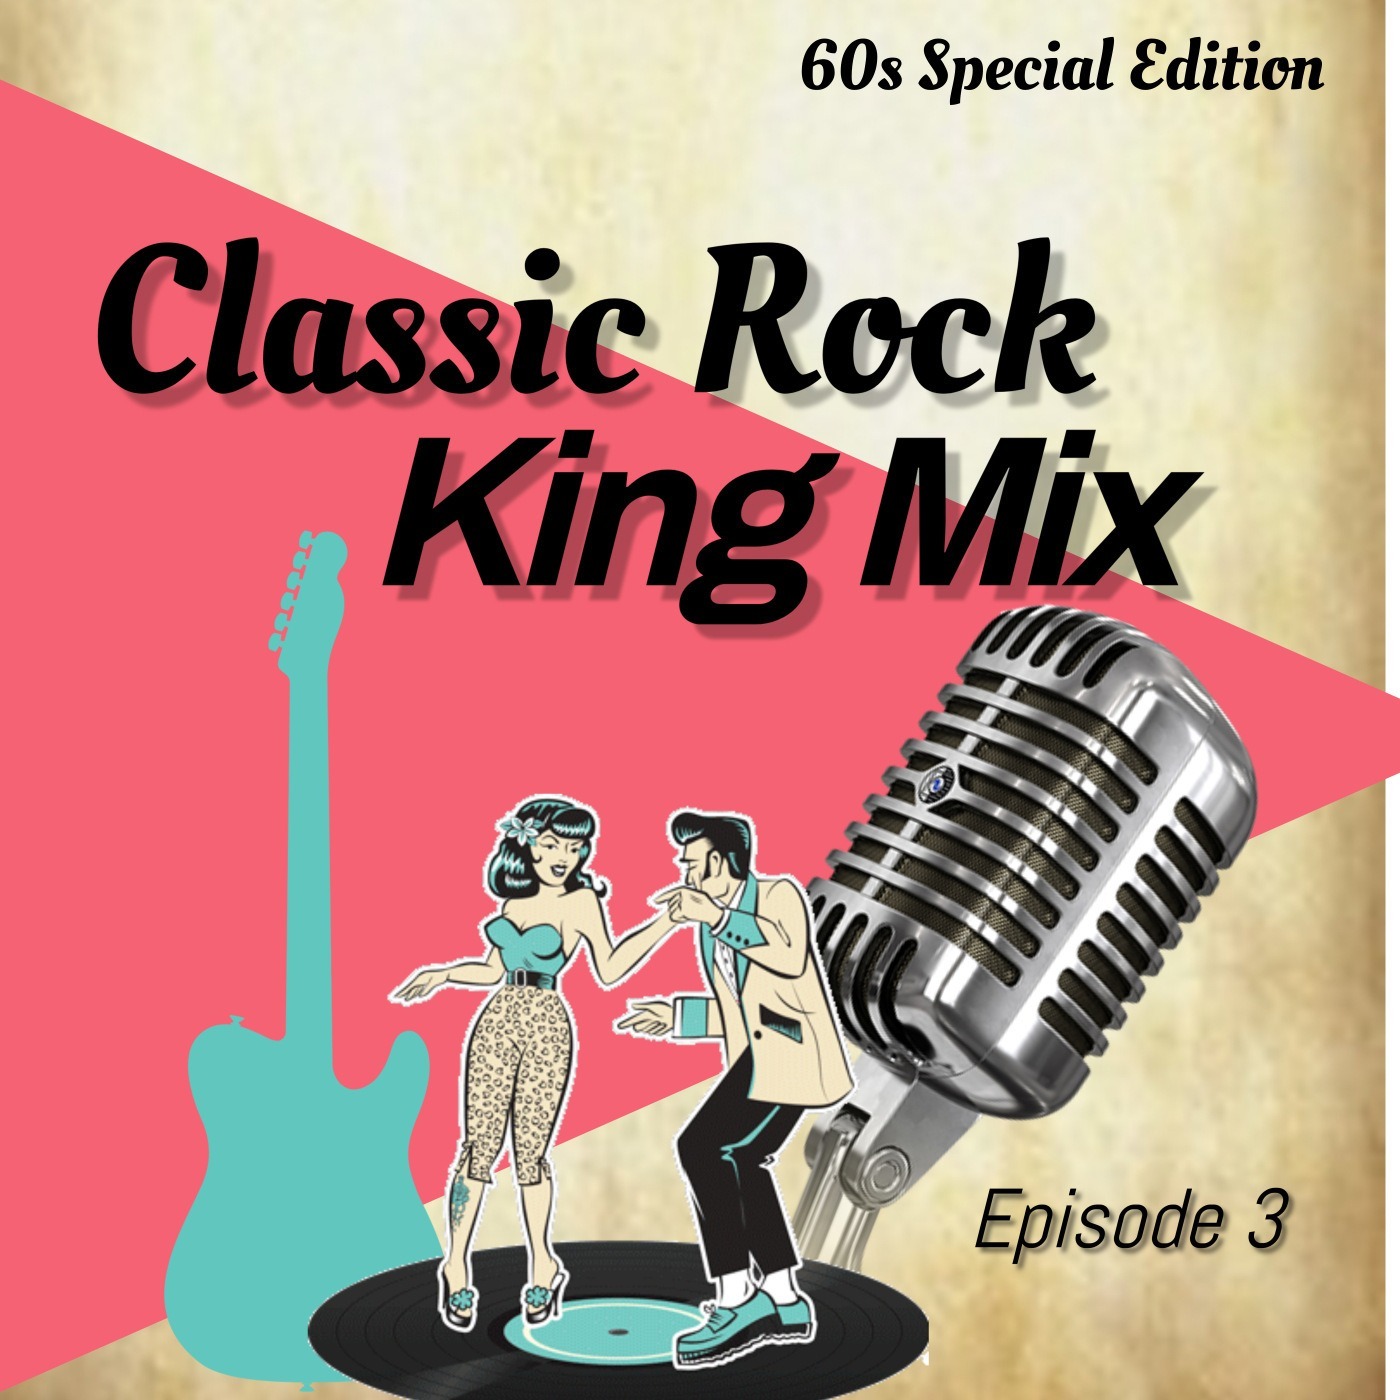 Classic Rock King Mix (Episode 3) Image